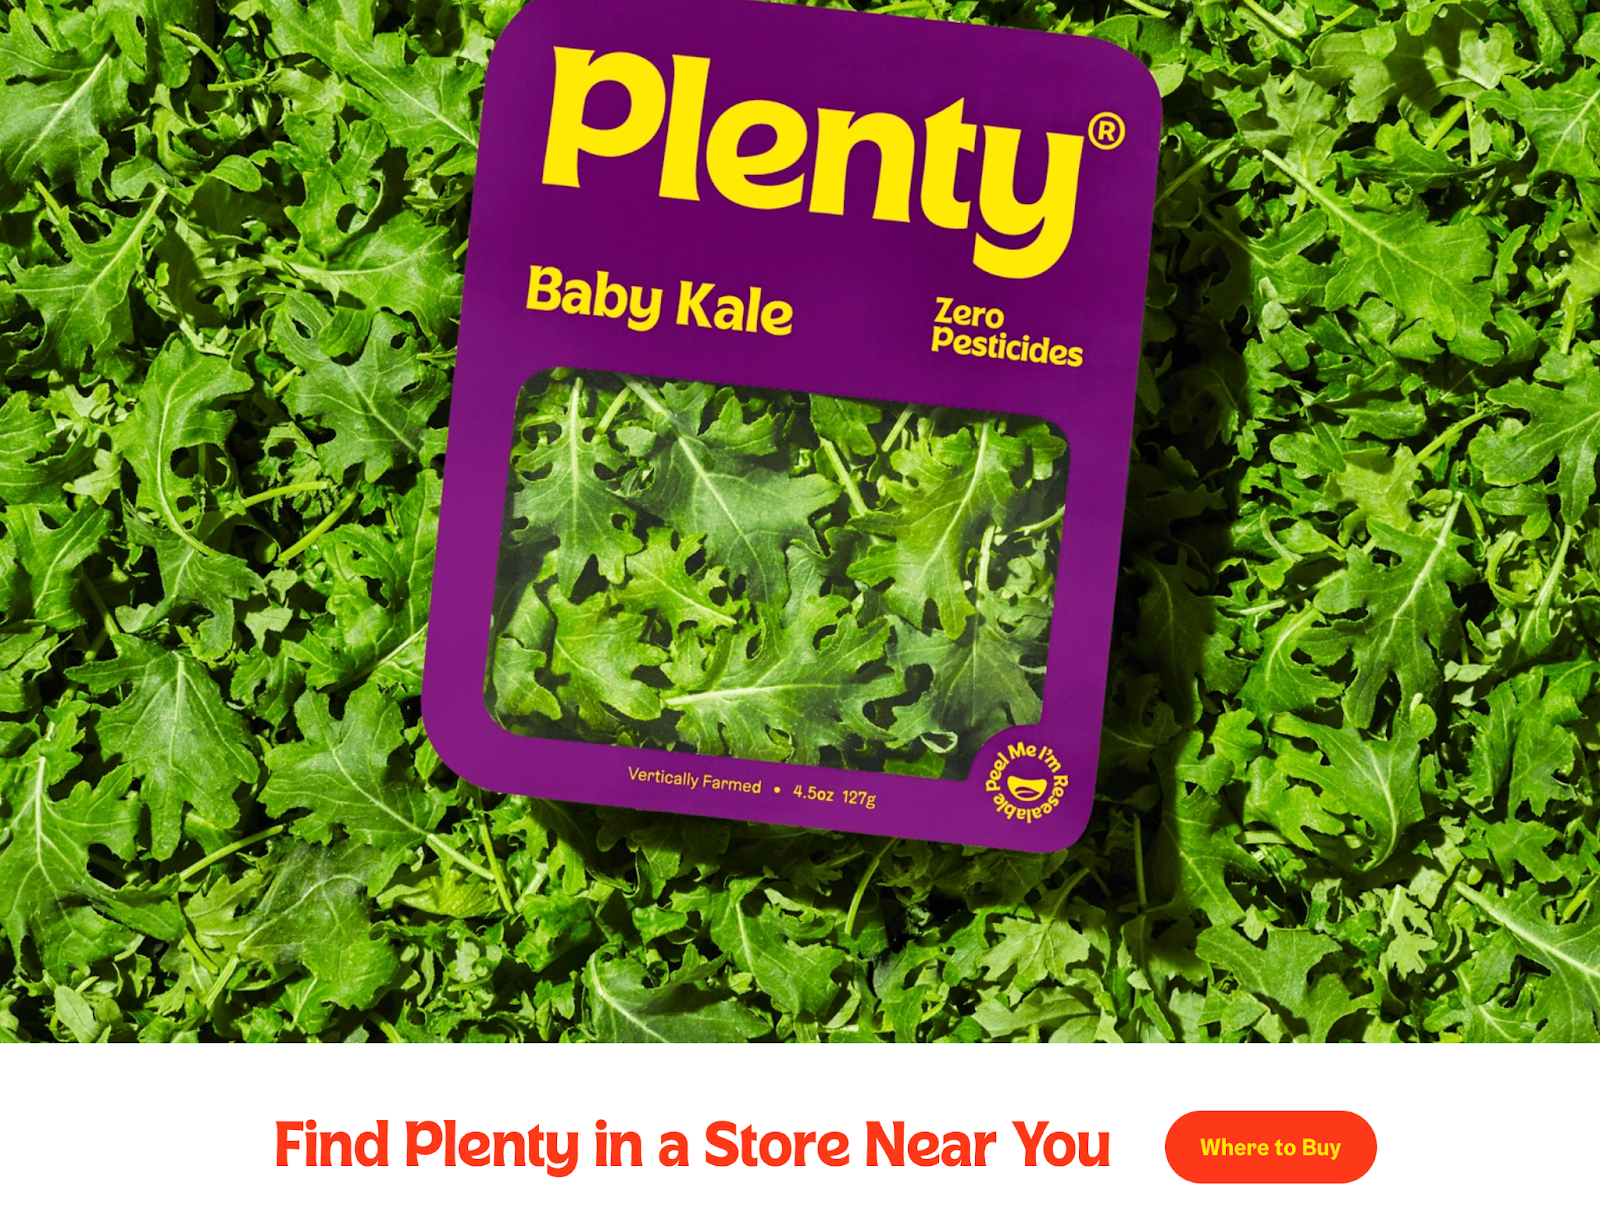 Plenty Baby Kale vibrant landing page.